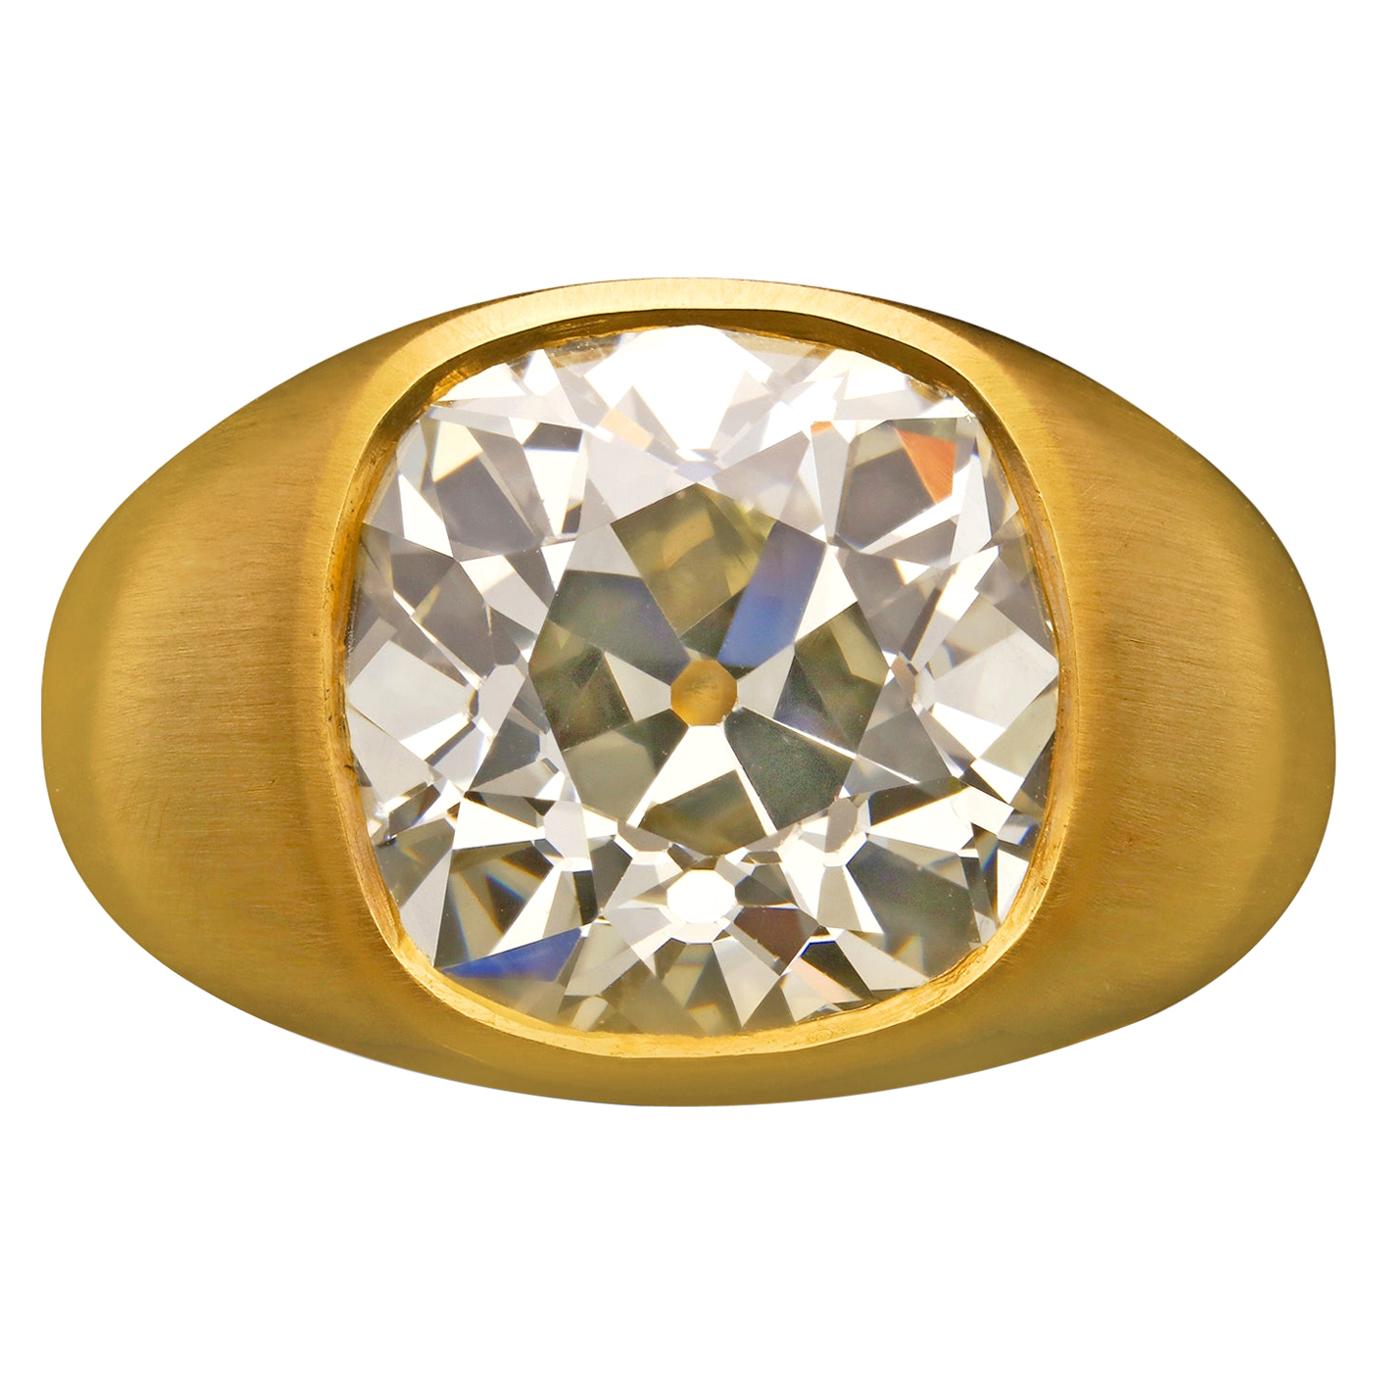 Hancocks 7.90 Carat Old Mine Cushion Diamond Mounted in 22k Gold 'Gypsy' Ring